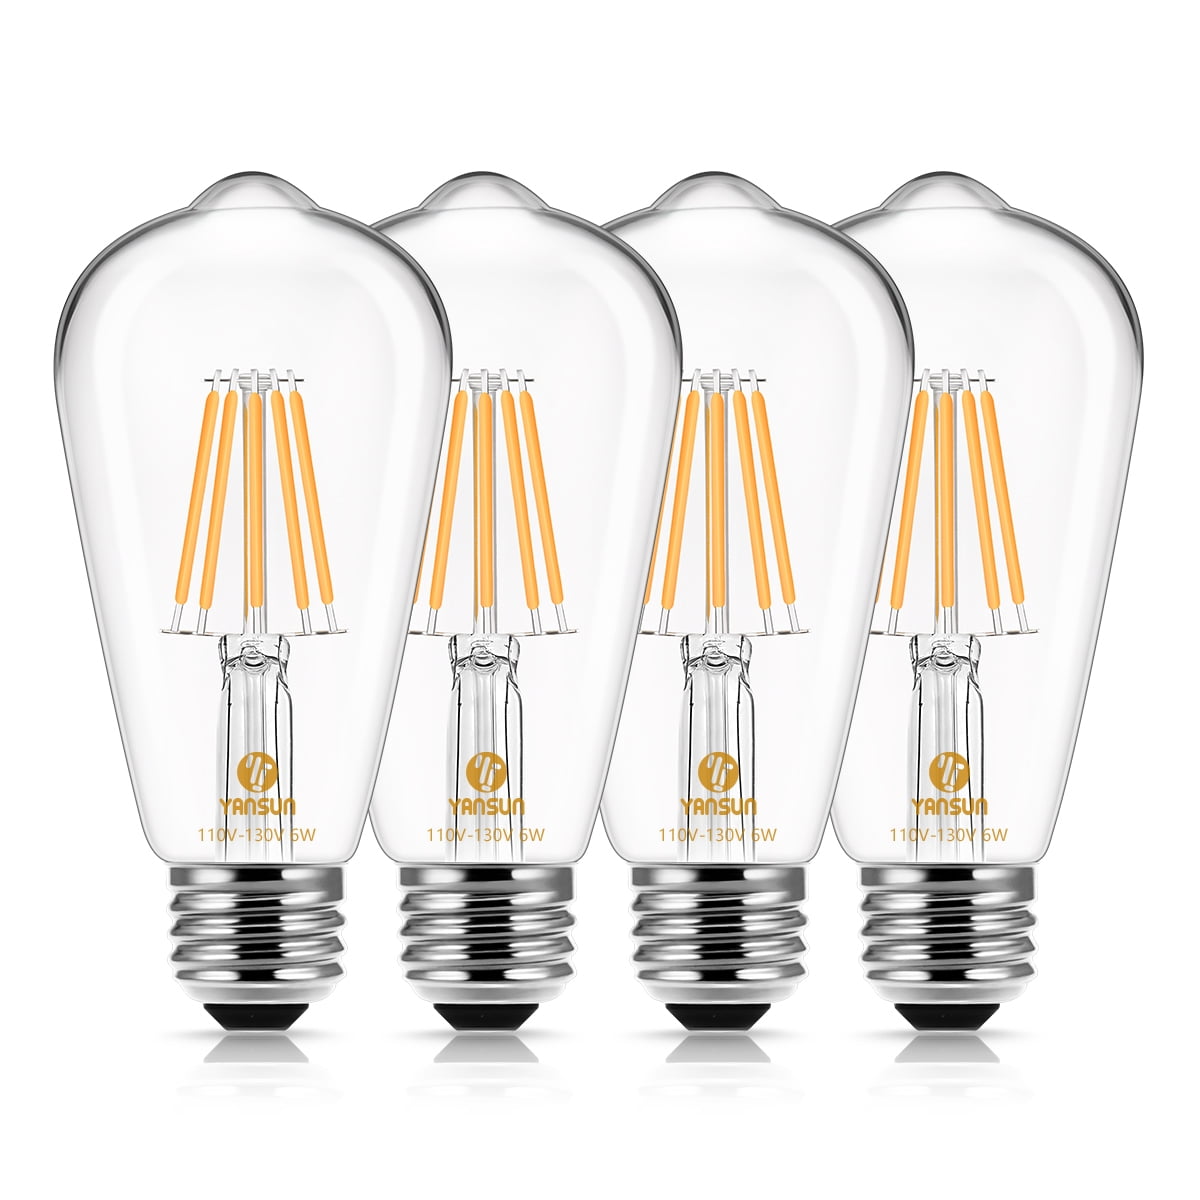 Pack of 6 Antique Filament Light Bulbs for Pendant Lights Sconces 6W ST64 Vintage Light Bulbs 600 Lumen Warm White 2700K E26 Standard Base Dimmable LED Edison Bulb 60W Equivalent